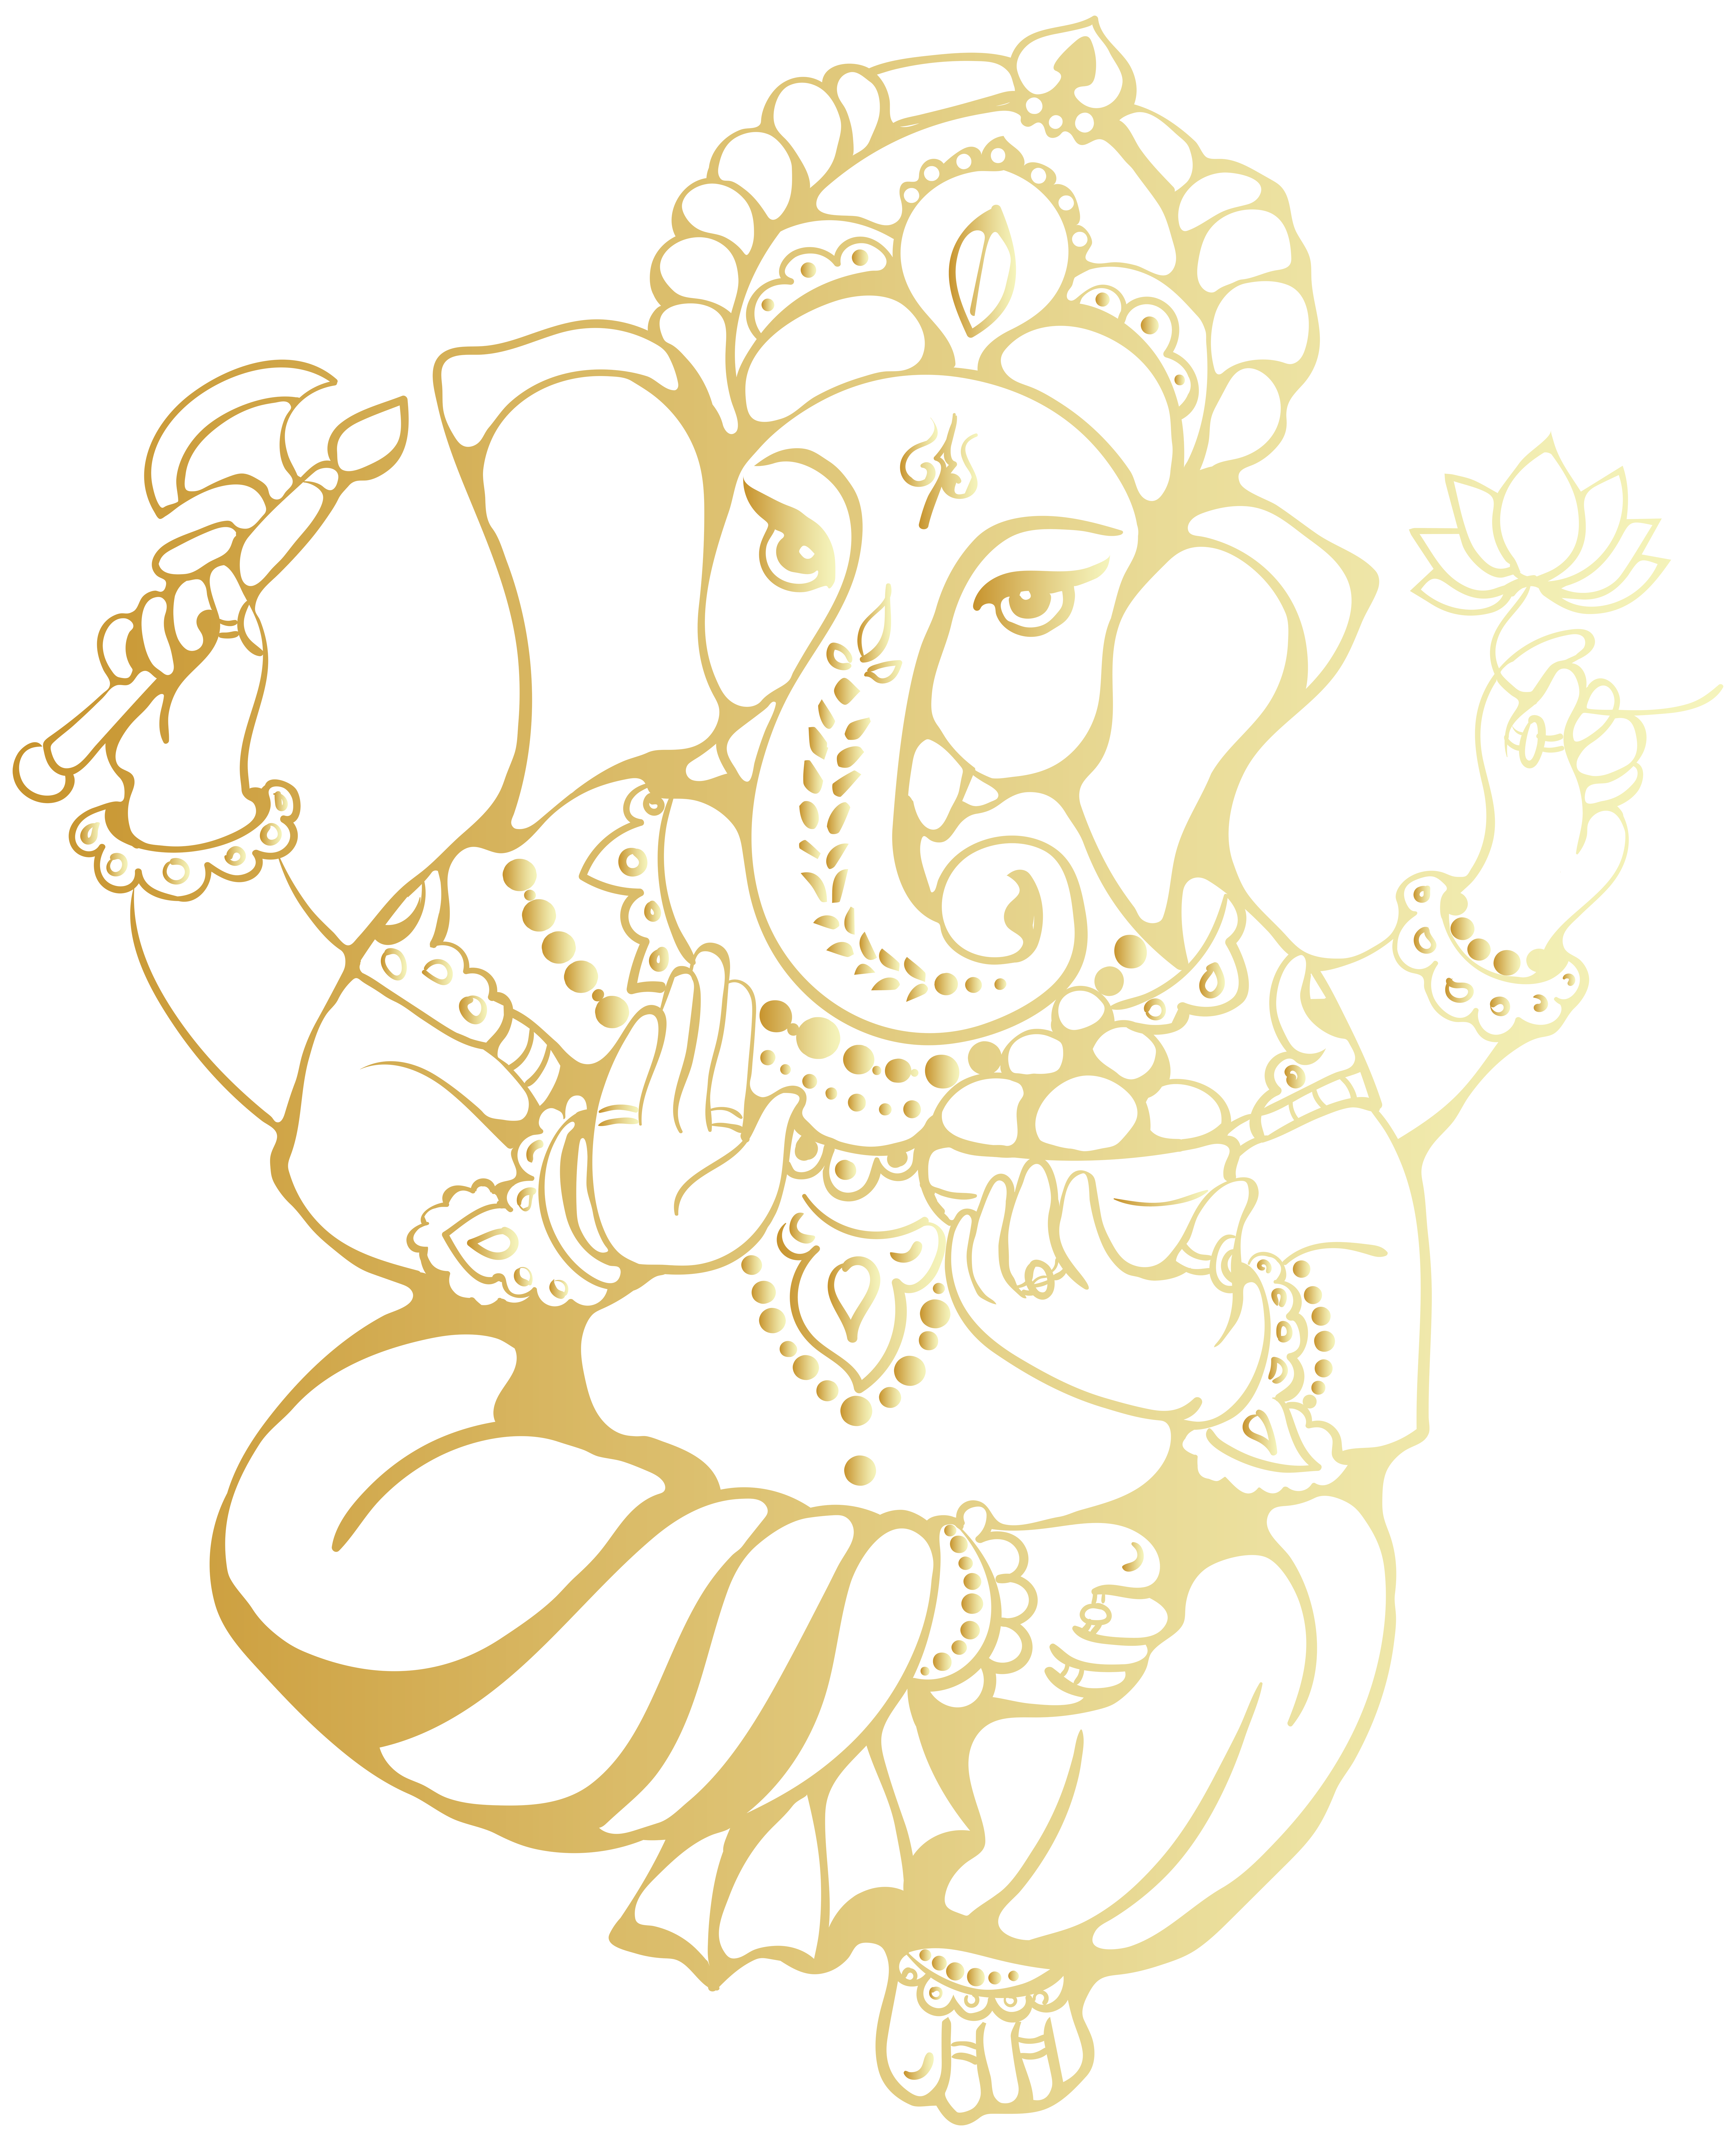 Lord Ganesh Free PNG Image